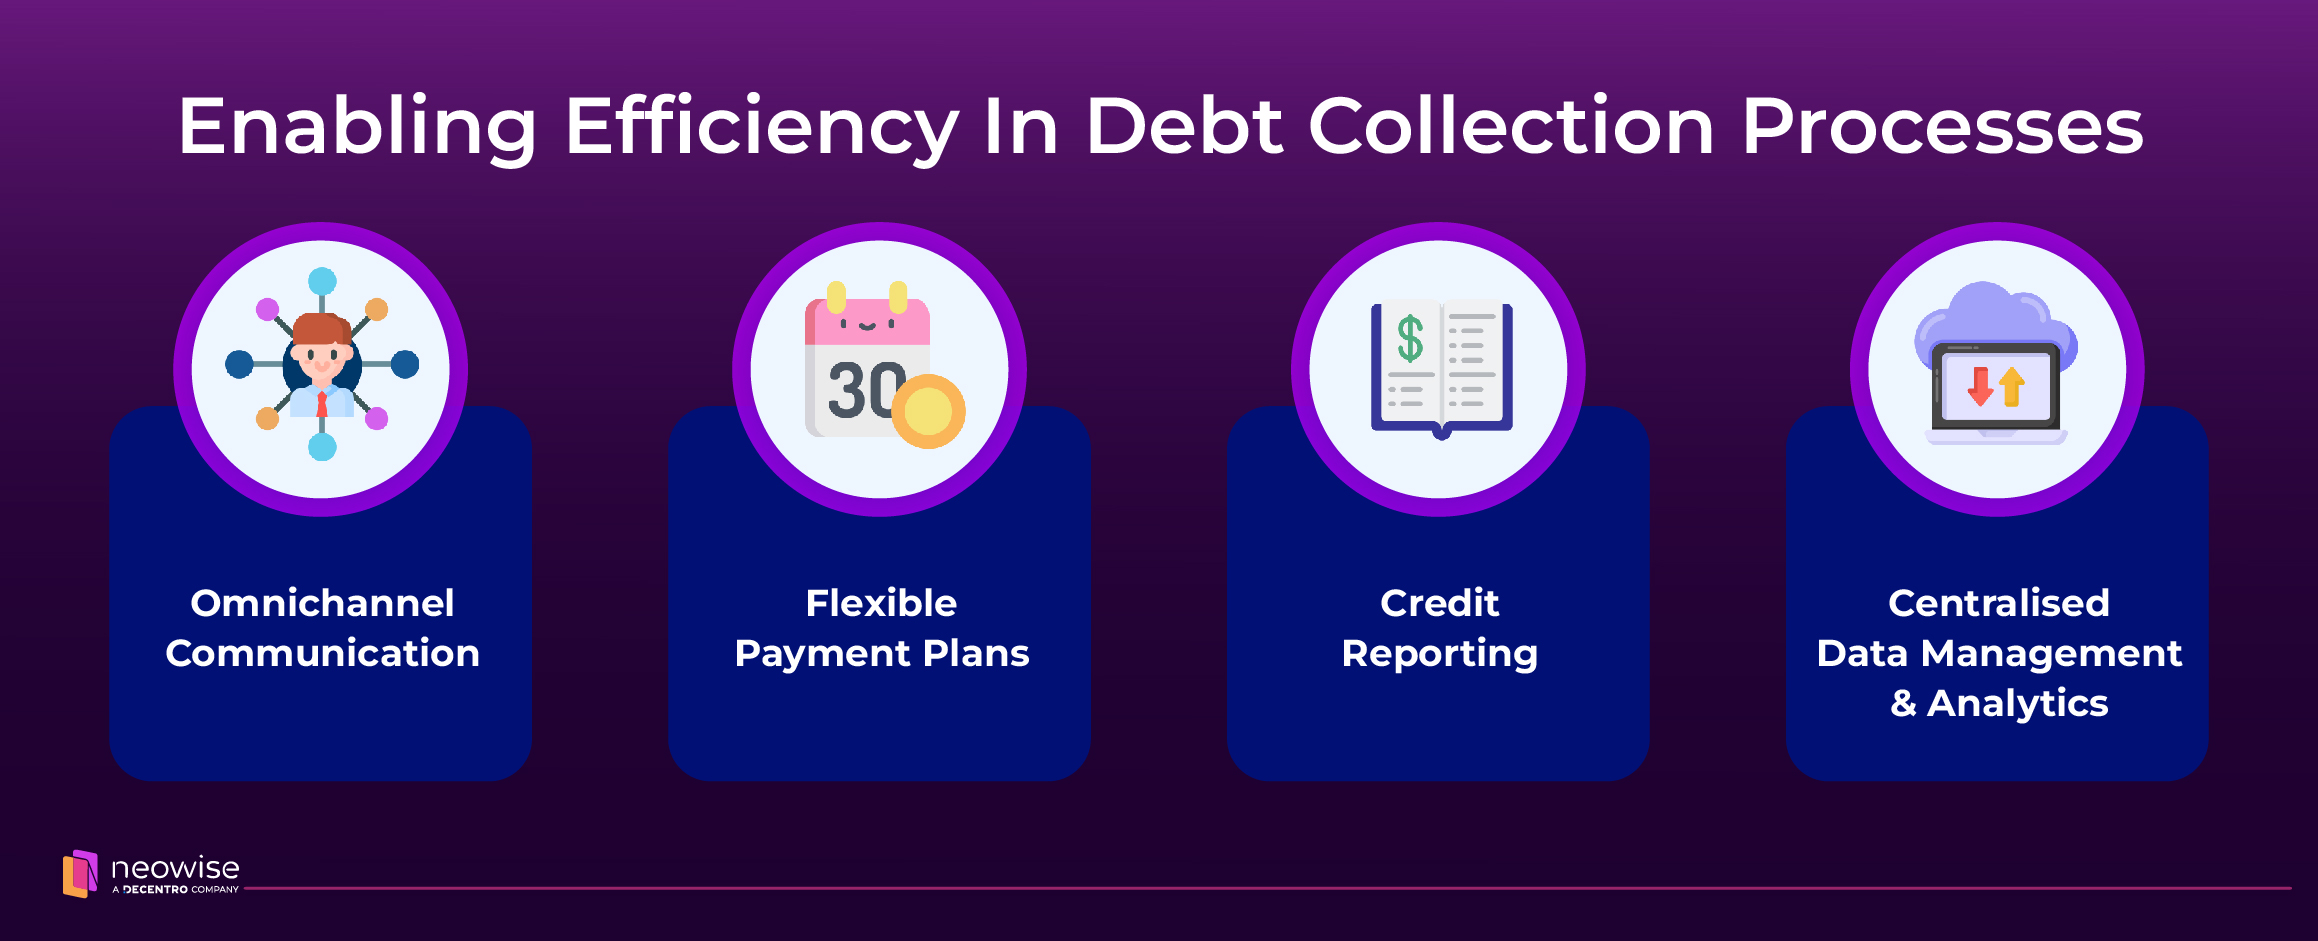 Enabling Efficiency in Debt Collection Processes 